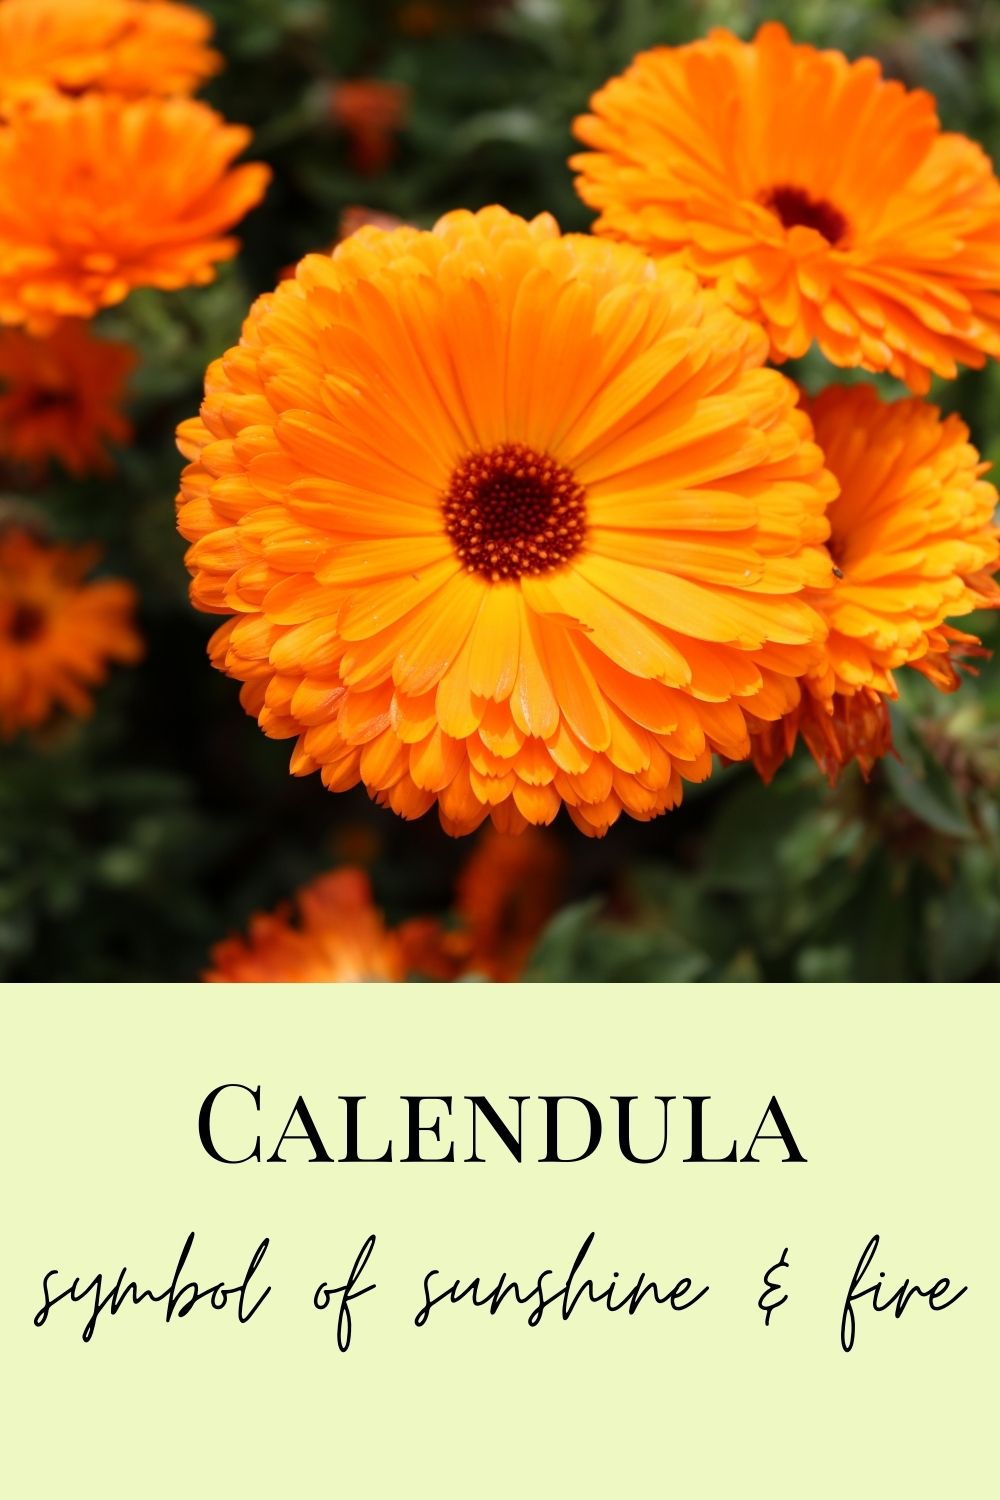 How To Use Calendula And Its Medicinal Benefits